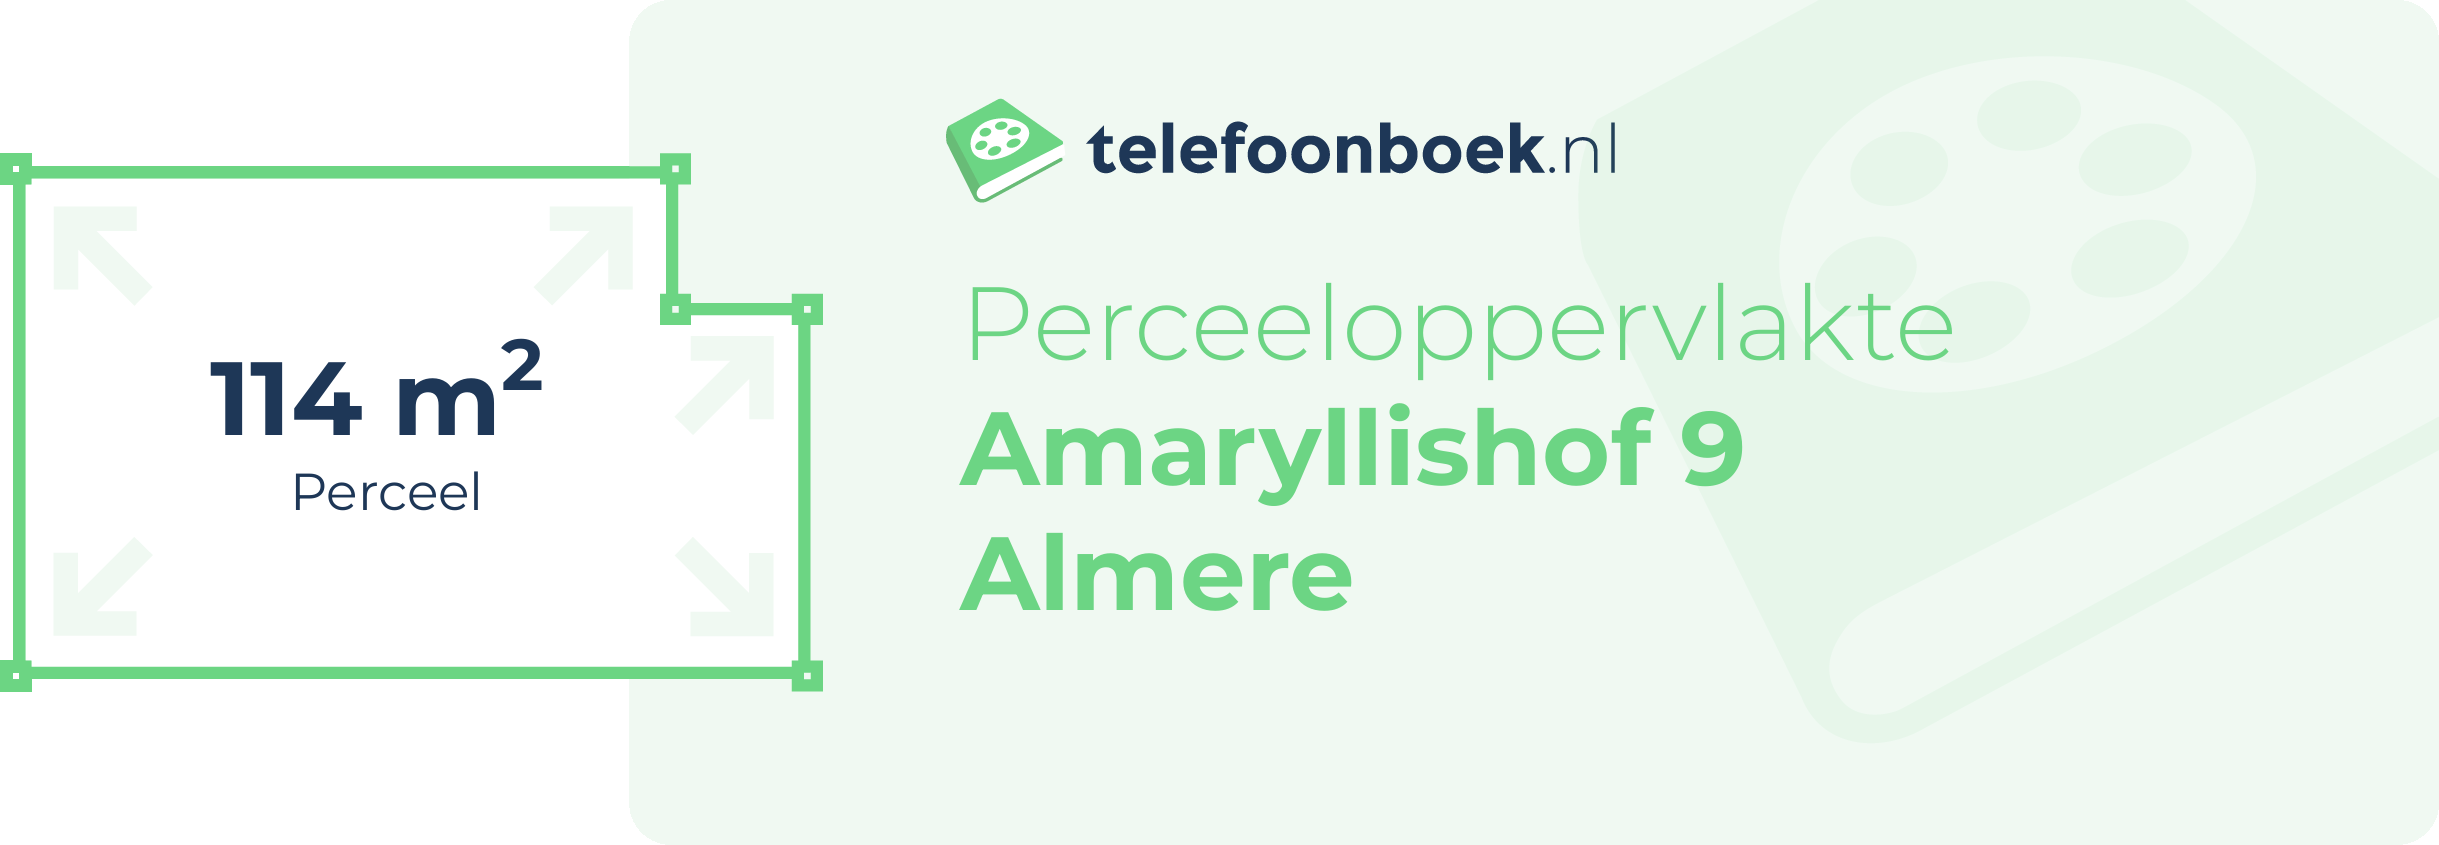 Perceeloppervlakte Amaryllishof 9 Almere